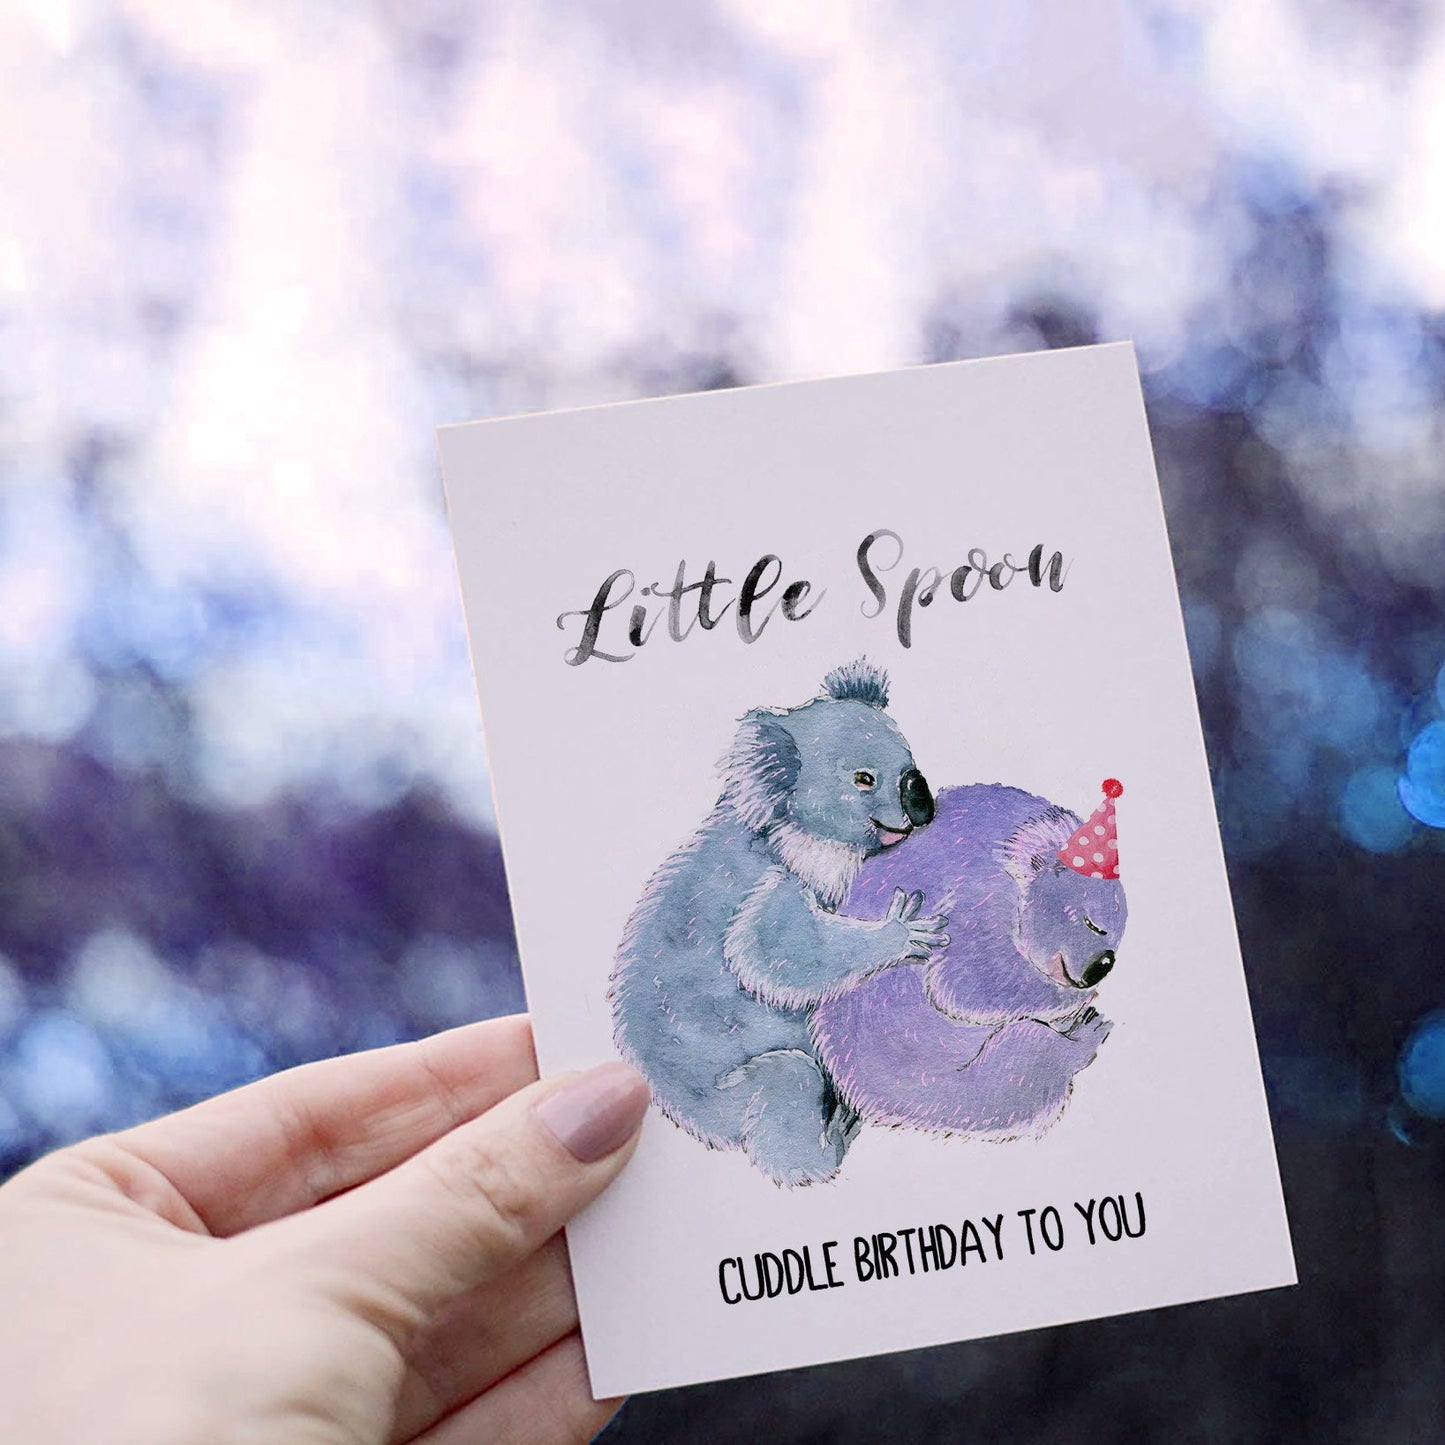 Cuddle Koala Birthday Card For Big Spoon - Cute Birthday Card For Boyfriend - Husband Birthday Gift From Wife